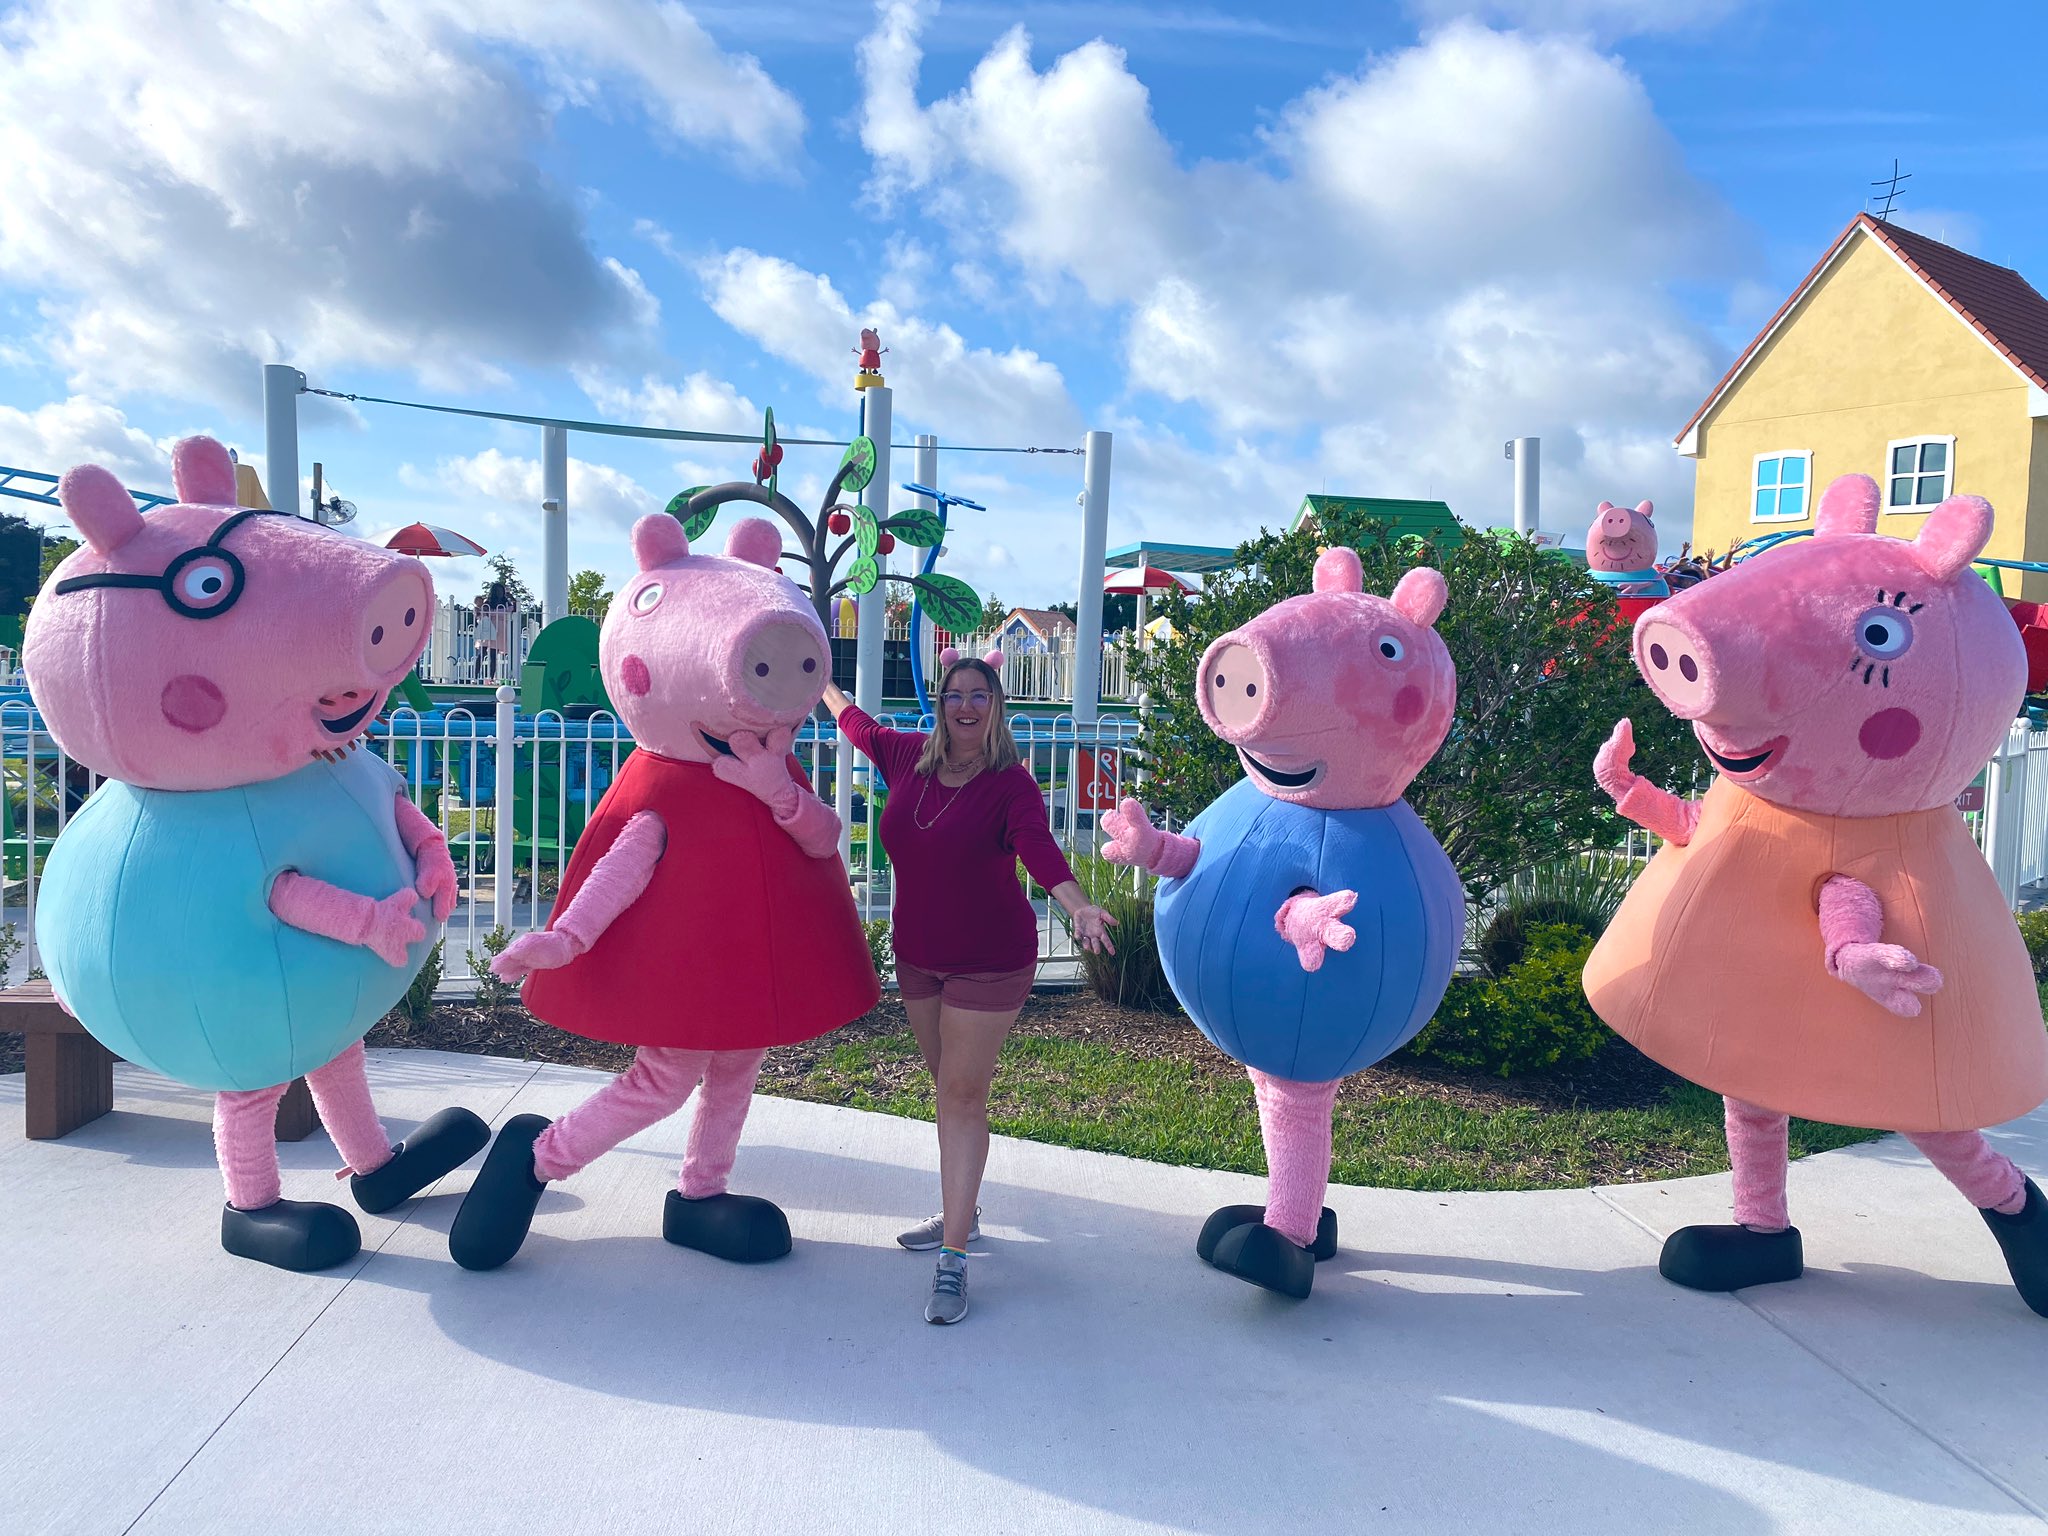 This summer, enjoy breakfast with Peppa Pig. - LEGOLAND in Florida